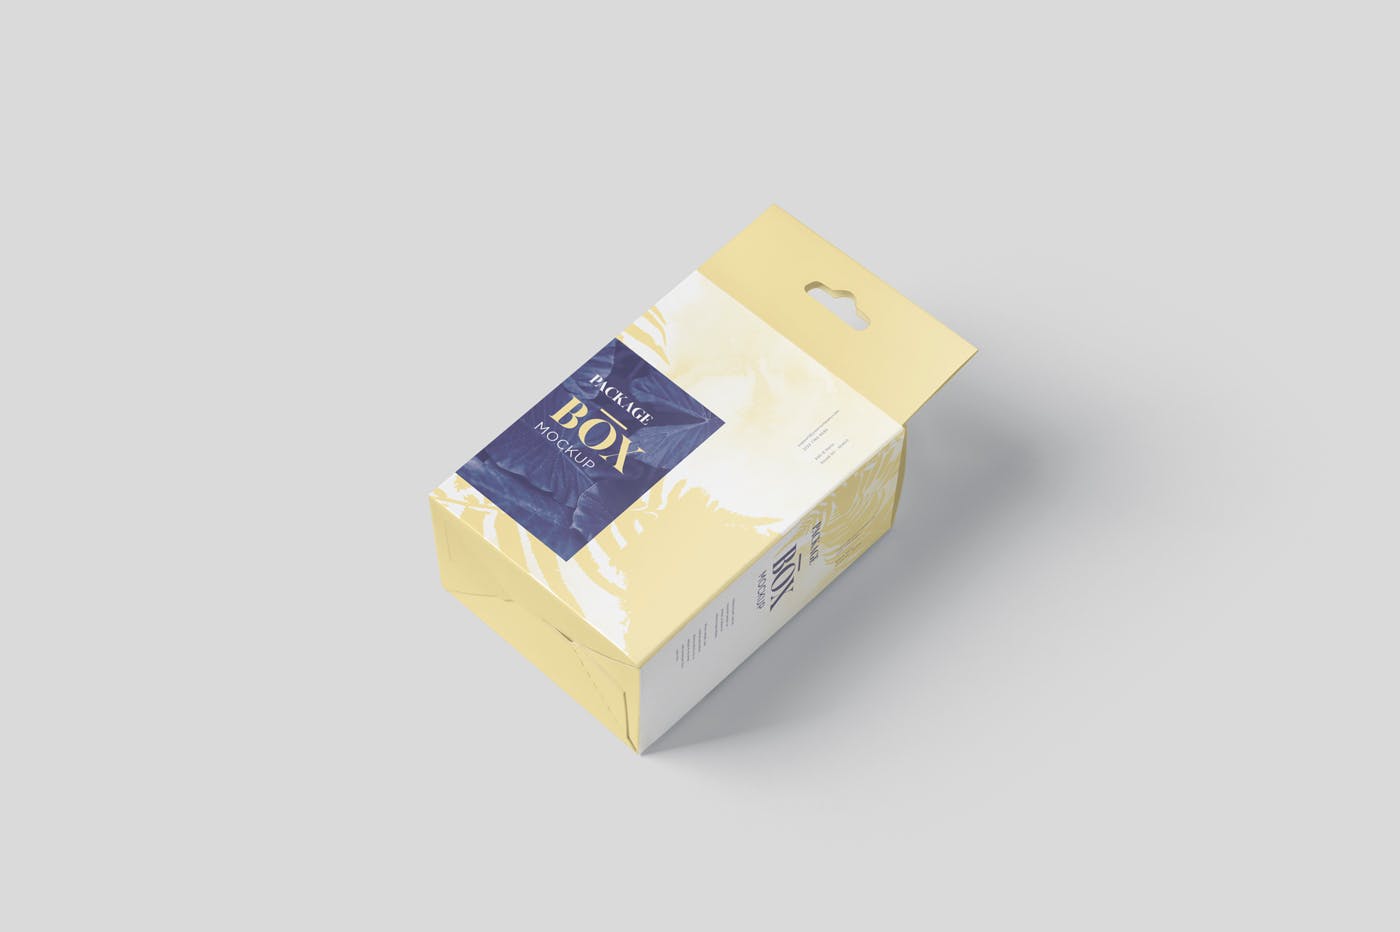 挂耳式扁平矩形包装盒16图库精选模板 Package Box Mockup Set – Slim Square with Hanger插图(5)